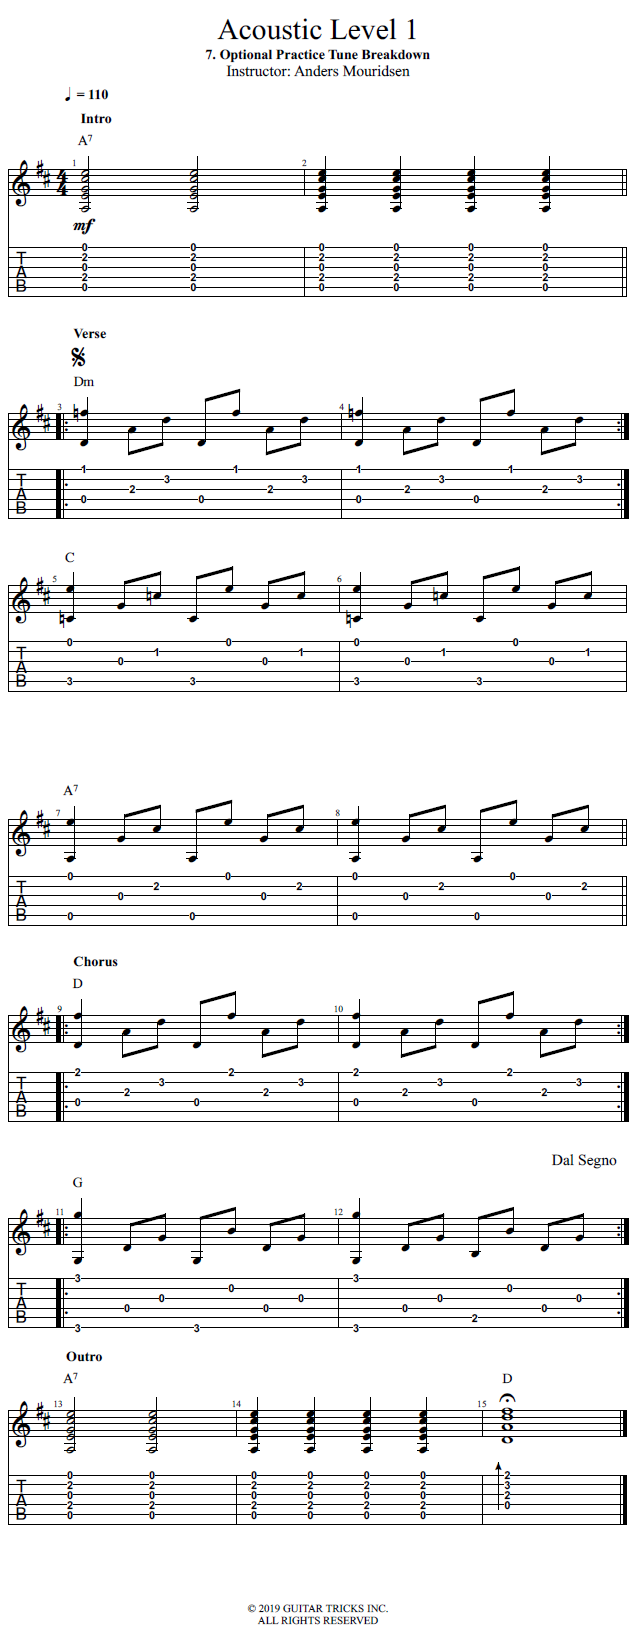 Optional Practice Tune Breakdown song notation